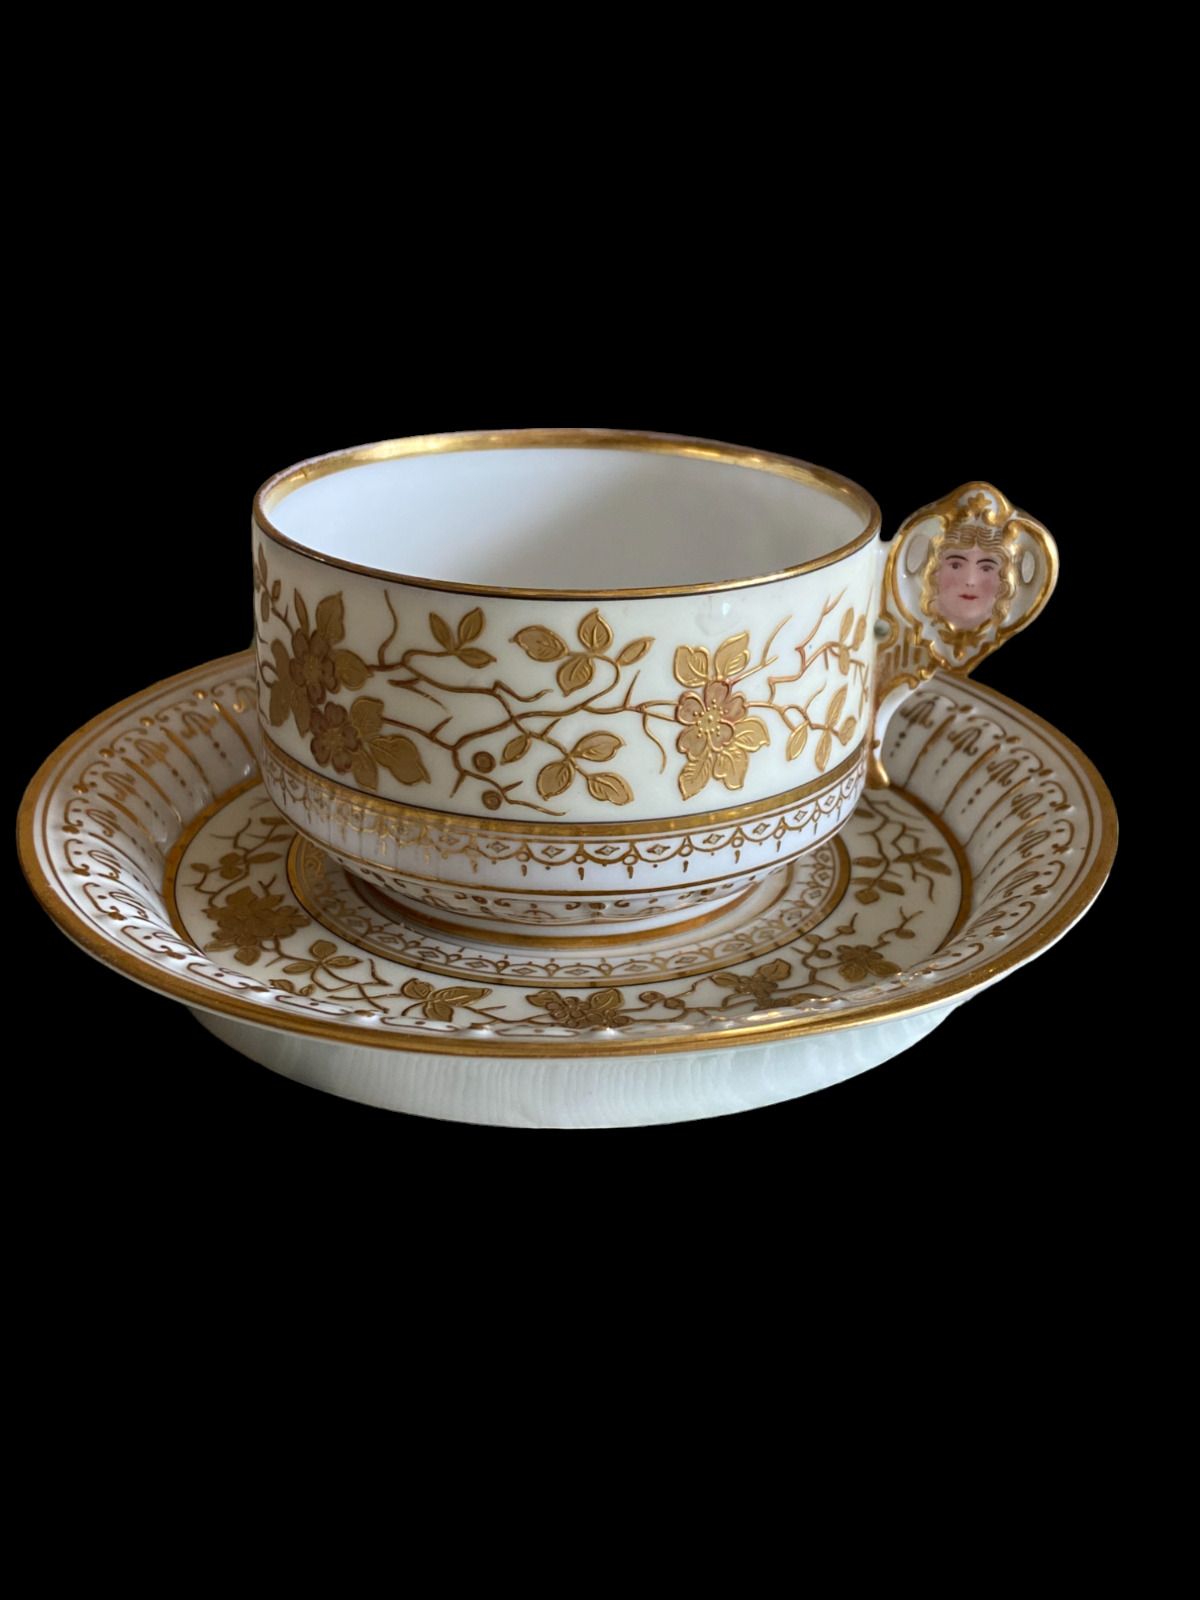 Exquisite Rare antique 1850 figural teacup and saucer Ernst Wahliss, Vienna 24kt